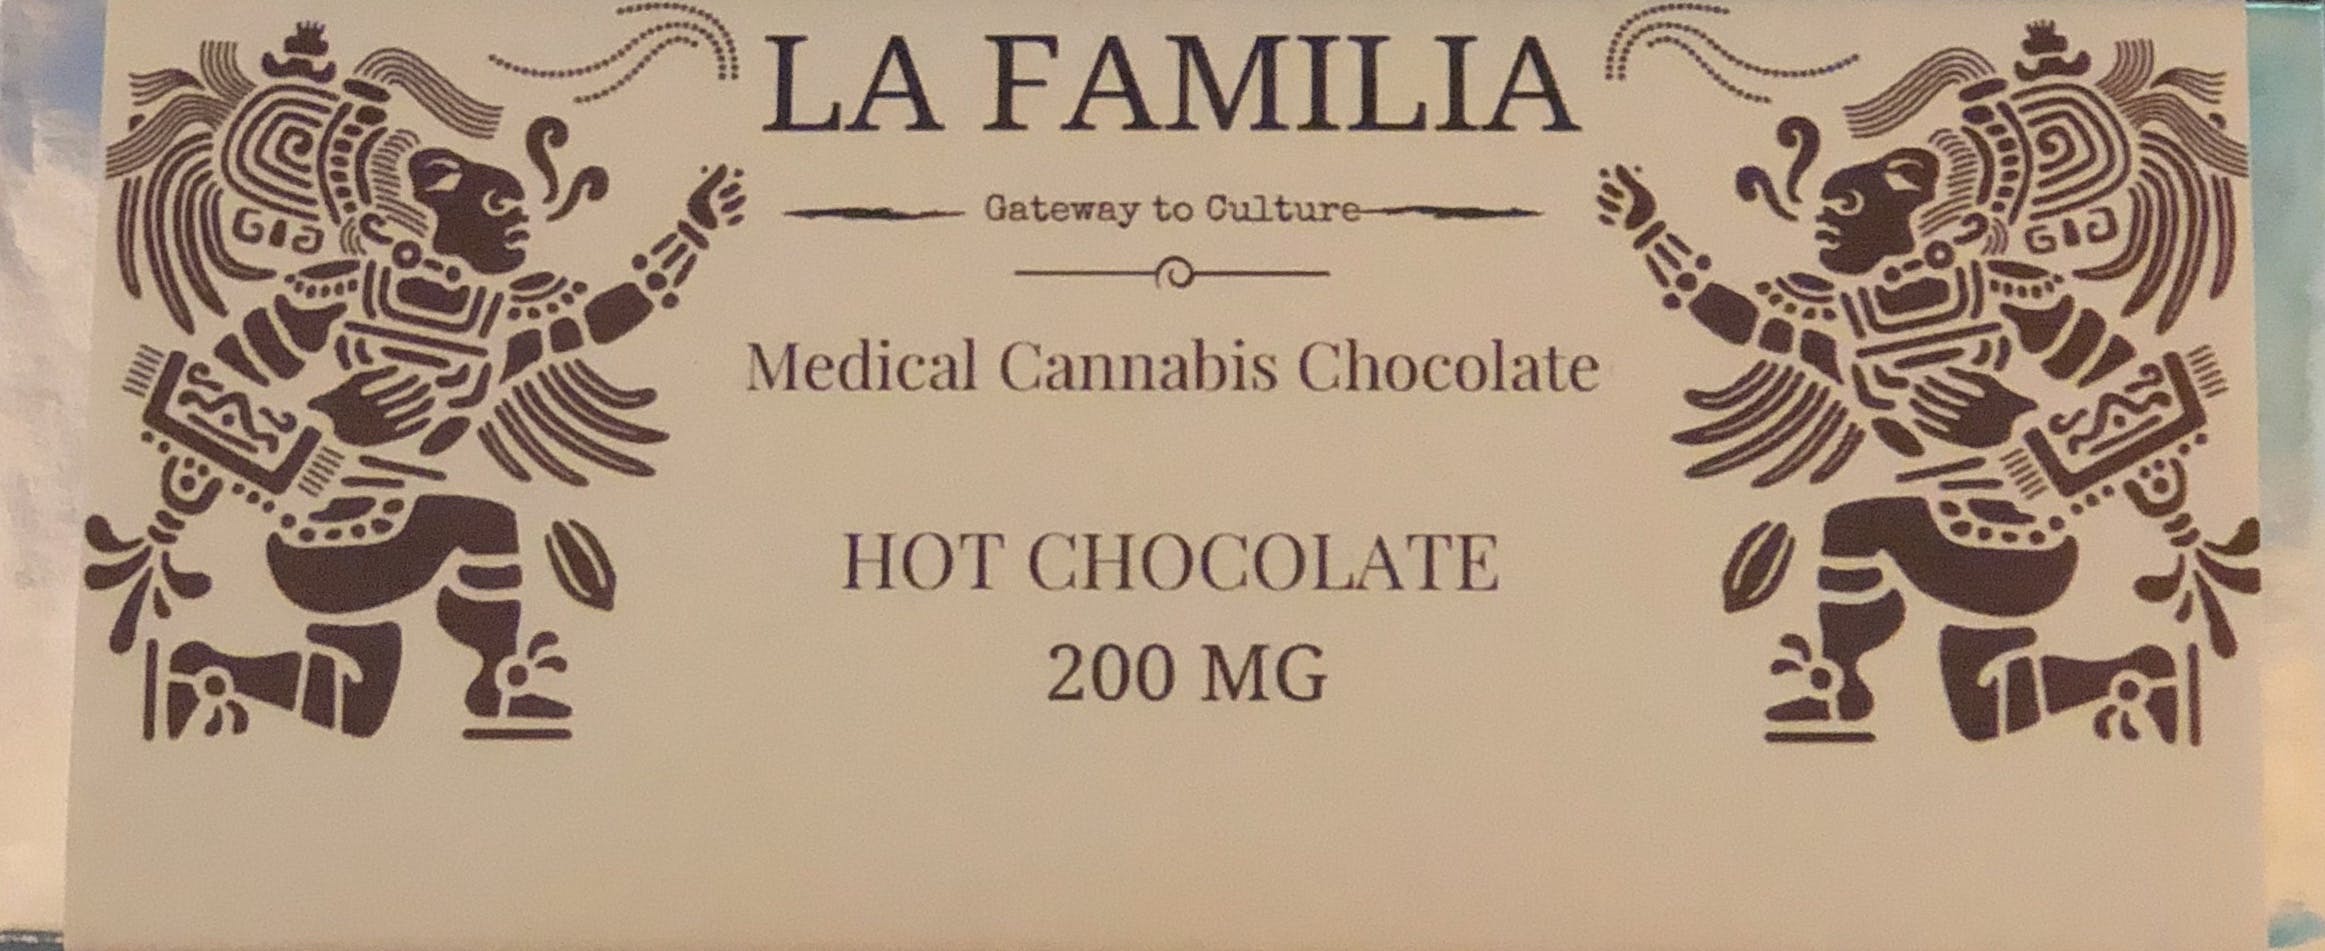 edible-la-familia-200mg-hot-chocolate